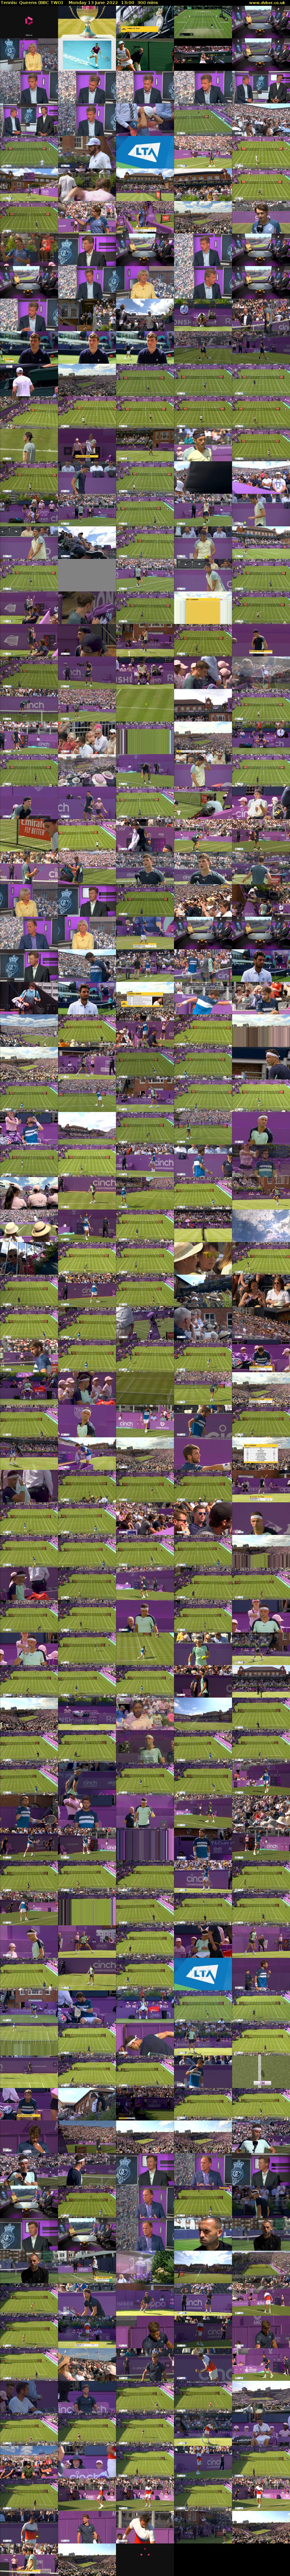 Tennis: Queens (BBC TWO) Monday 13 June 2022 13:00 - 18:00